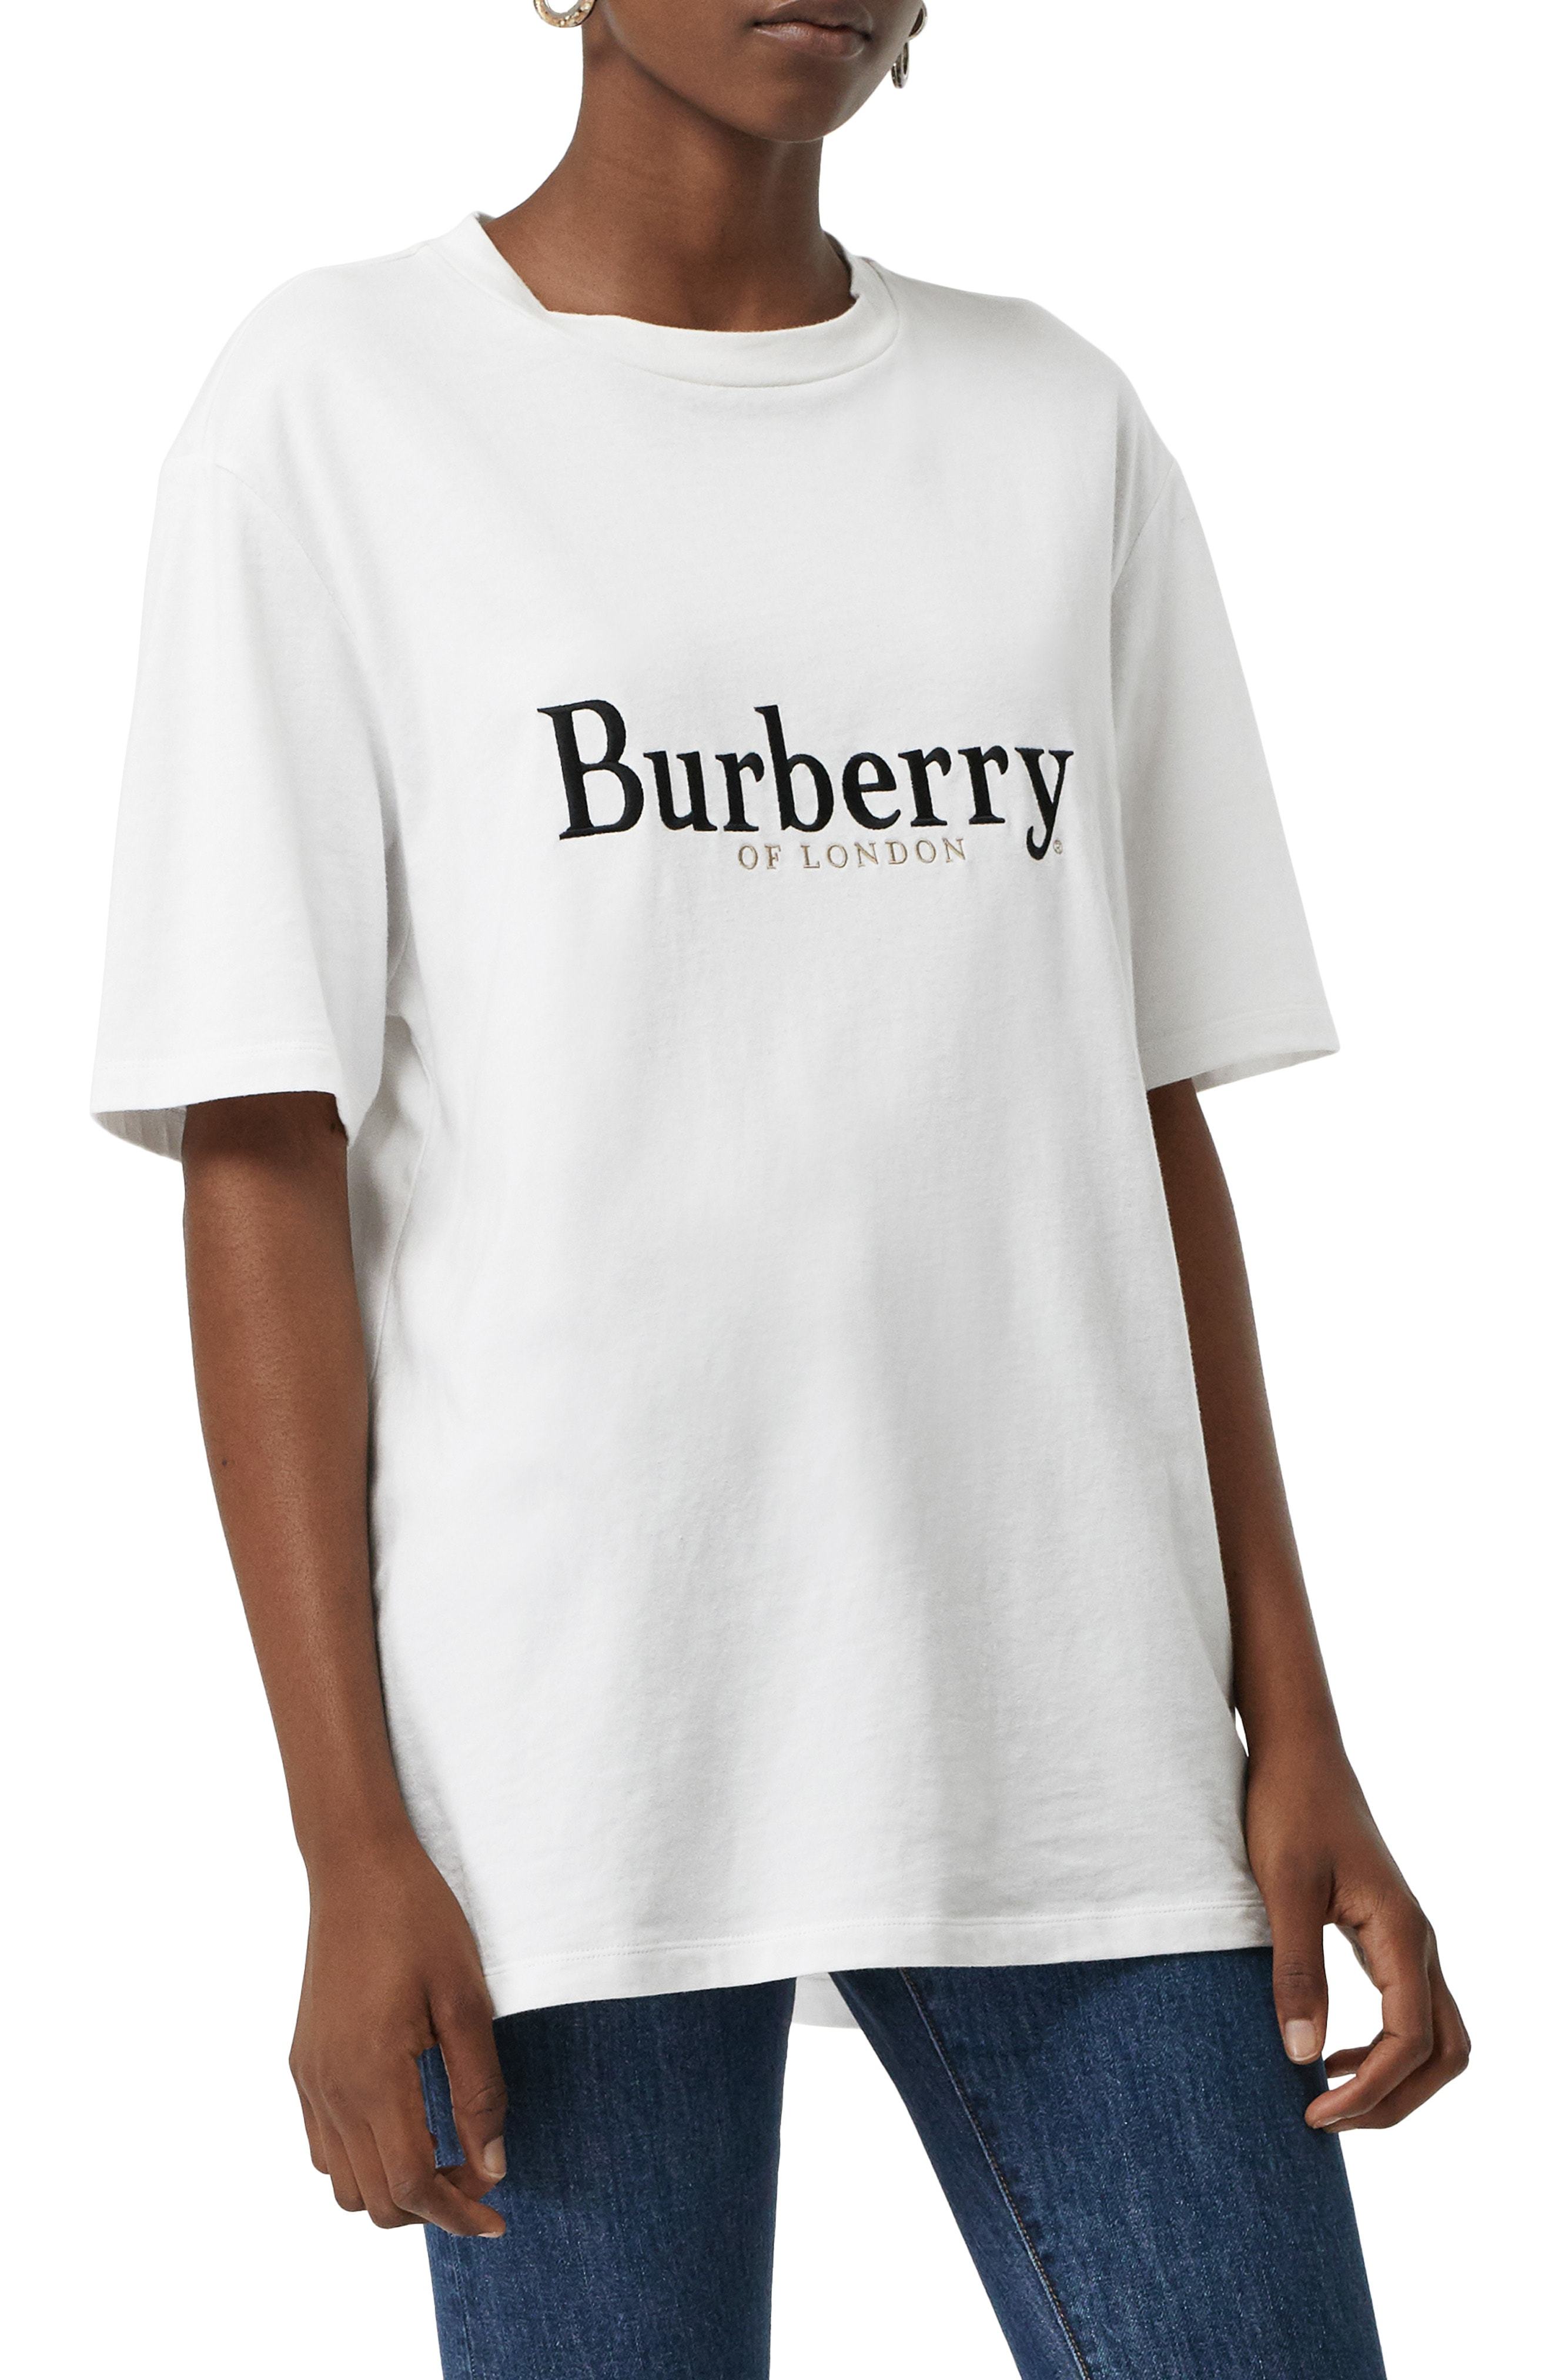 burberry archive logo t shirt